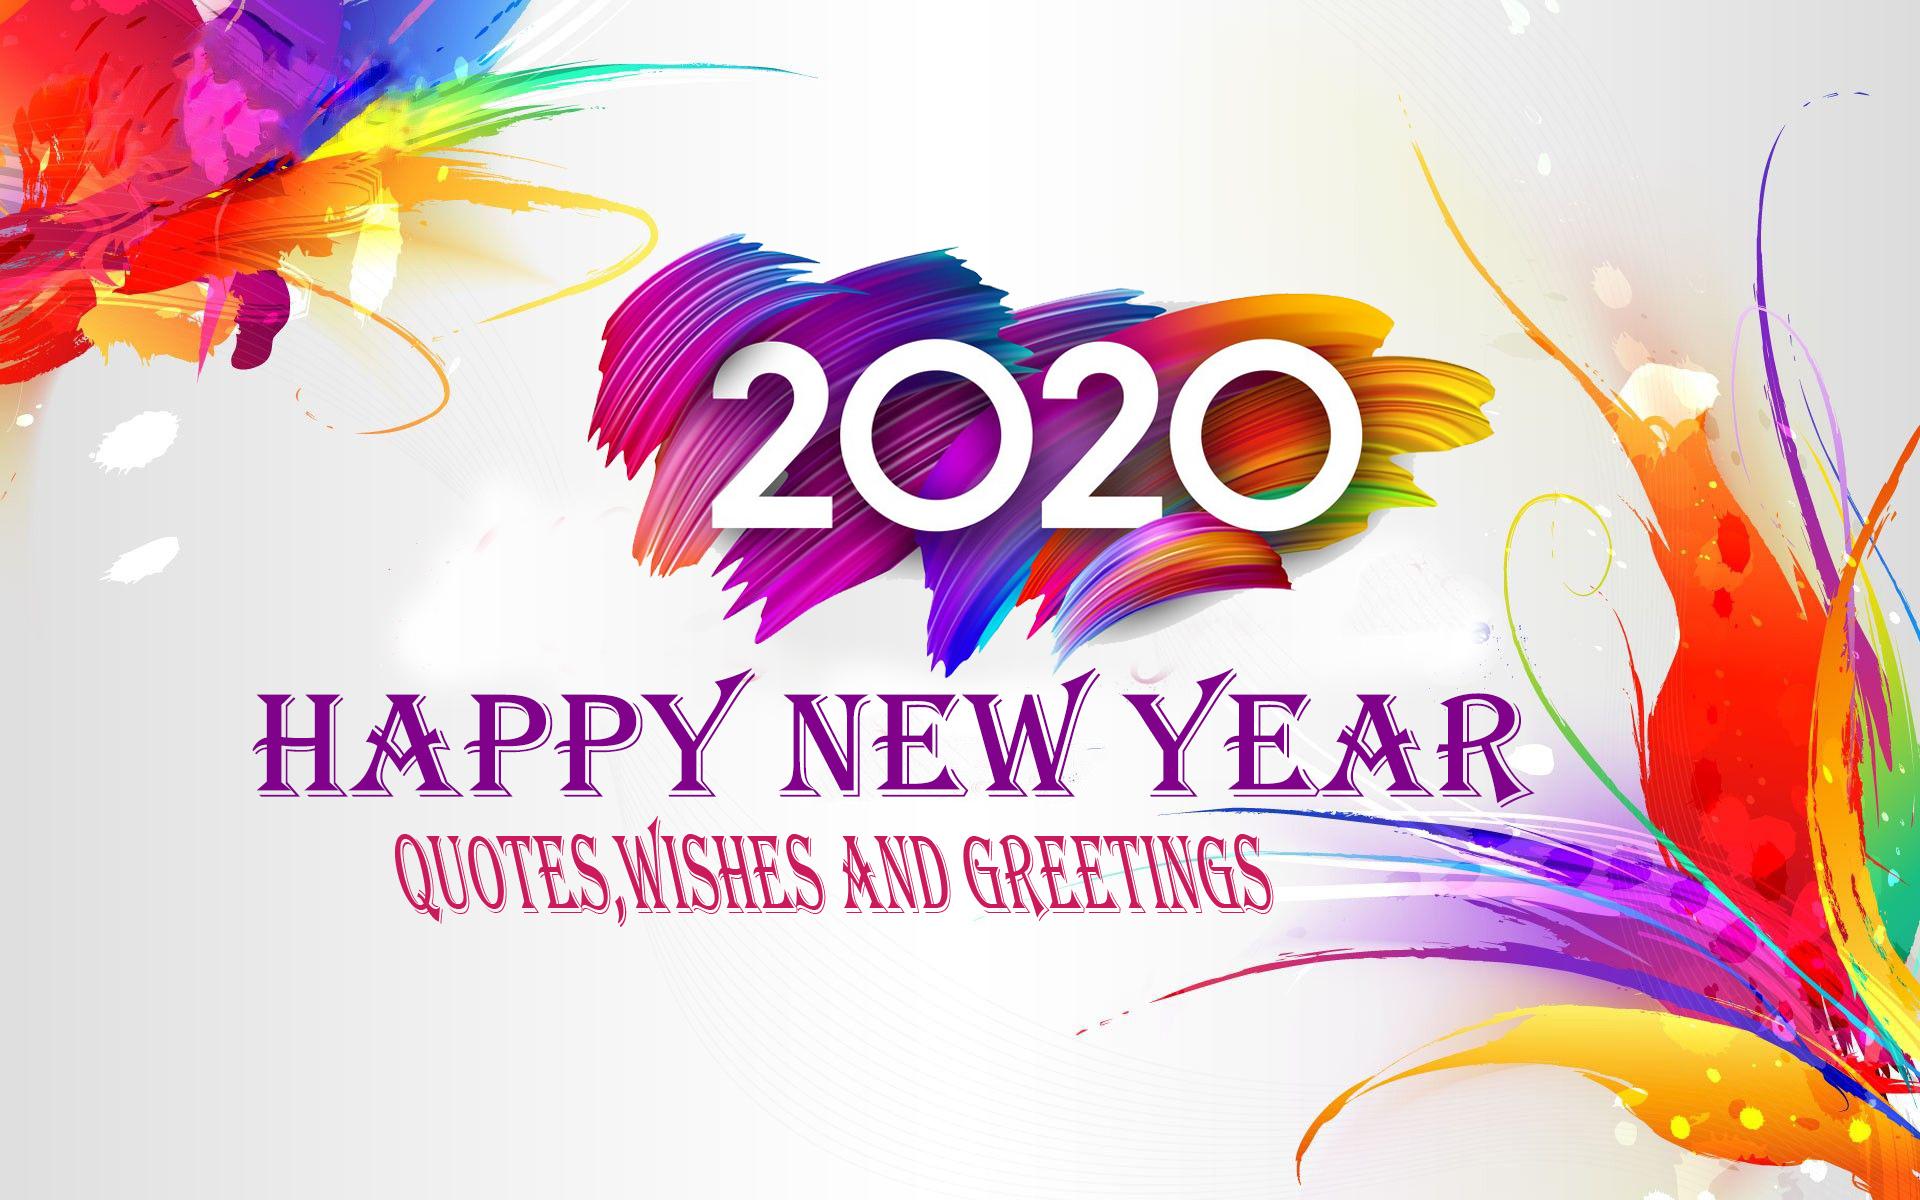 Happy New Year 2020 HD Image for WhatsApp, FB & Instagram